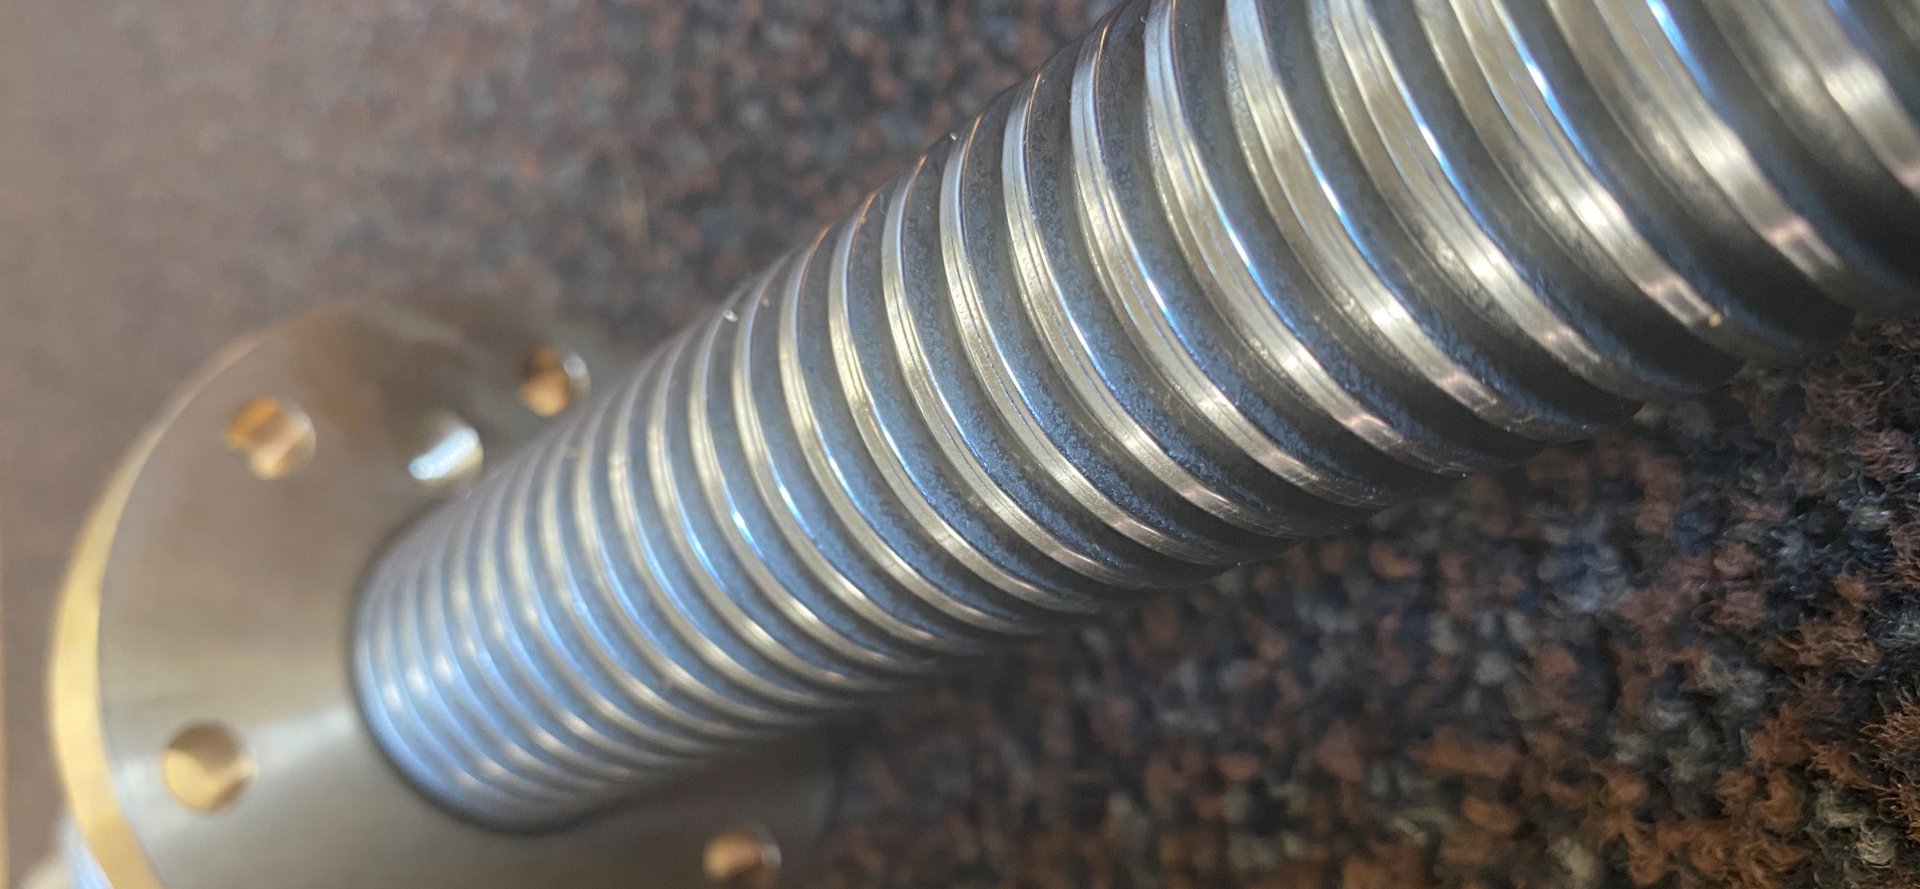 Close-Up of an Acme Threaded Bolt